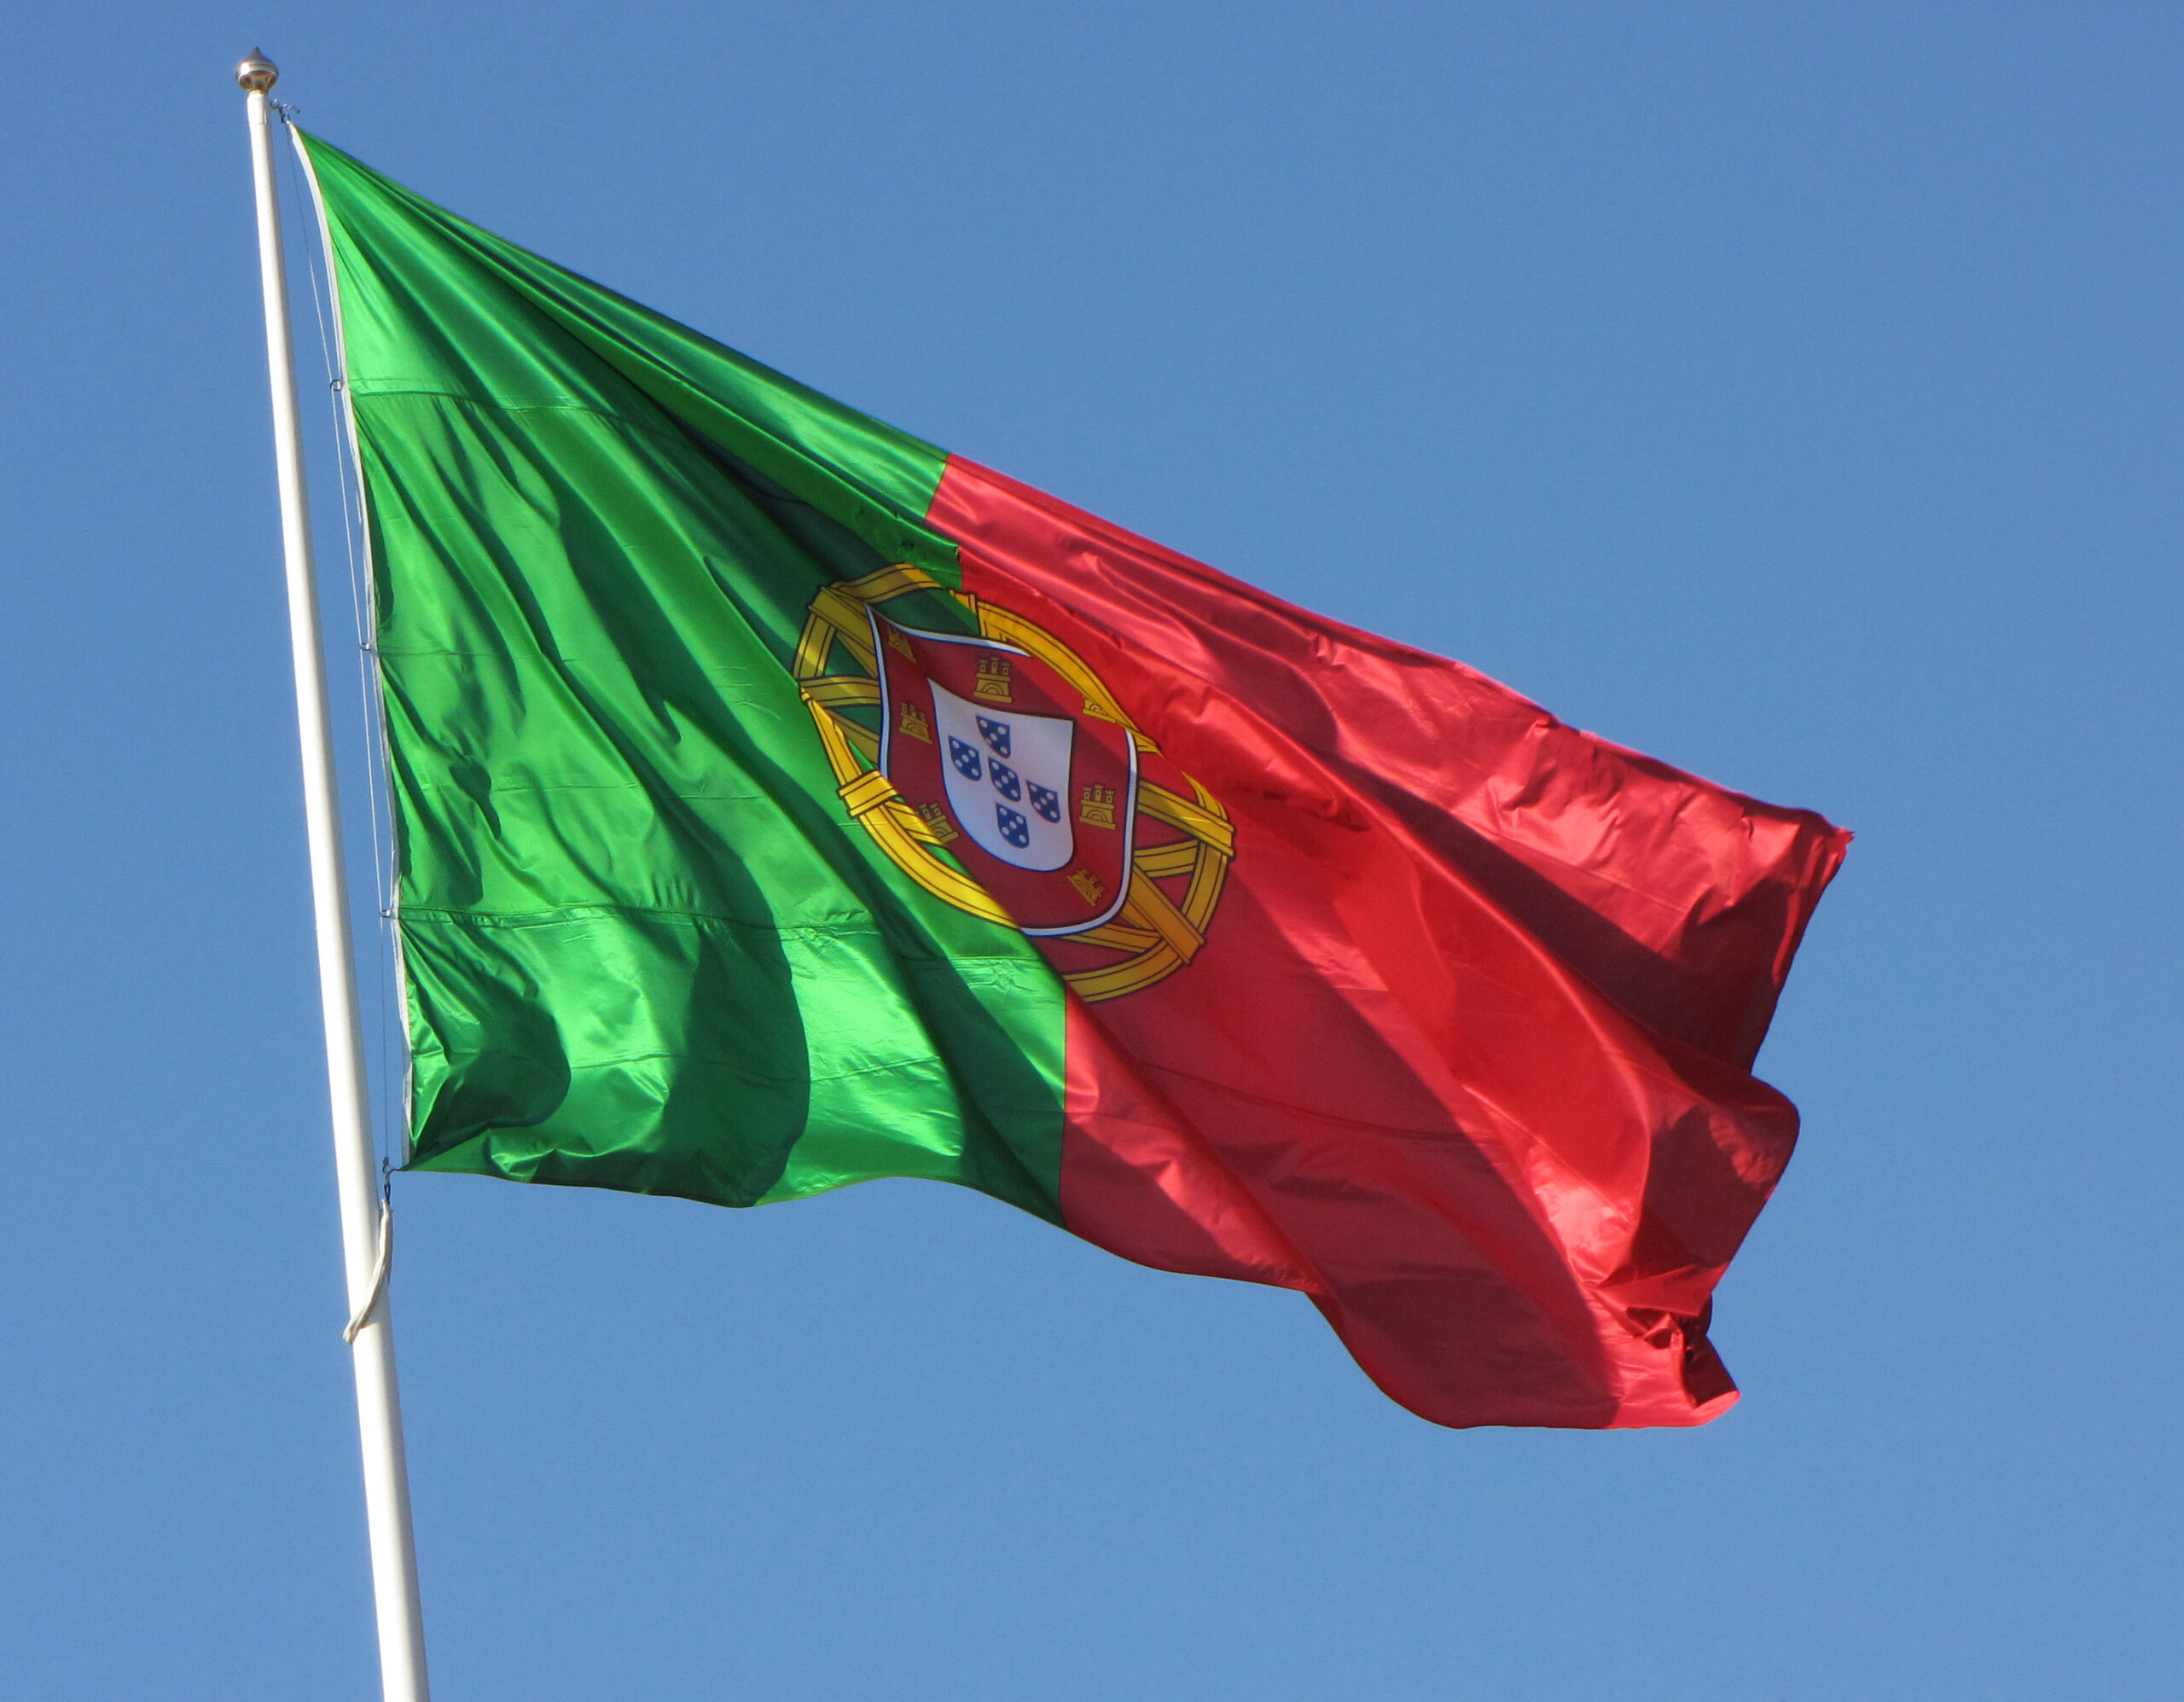 A PORTUGUESA Hino Nacional Português